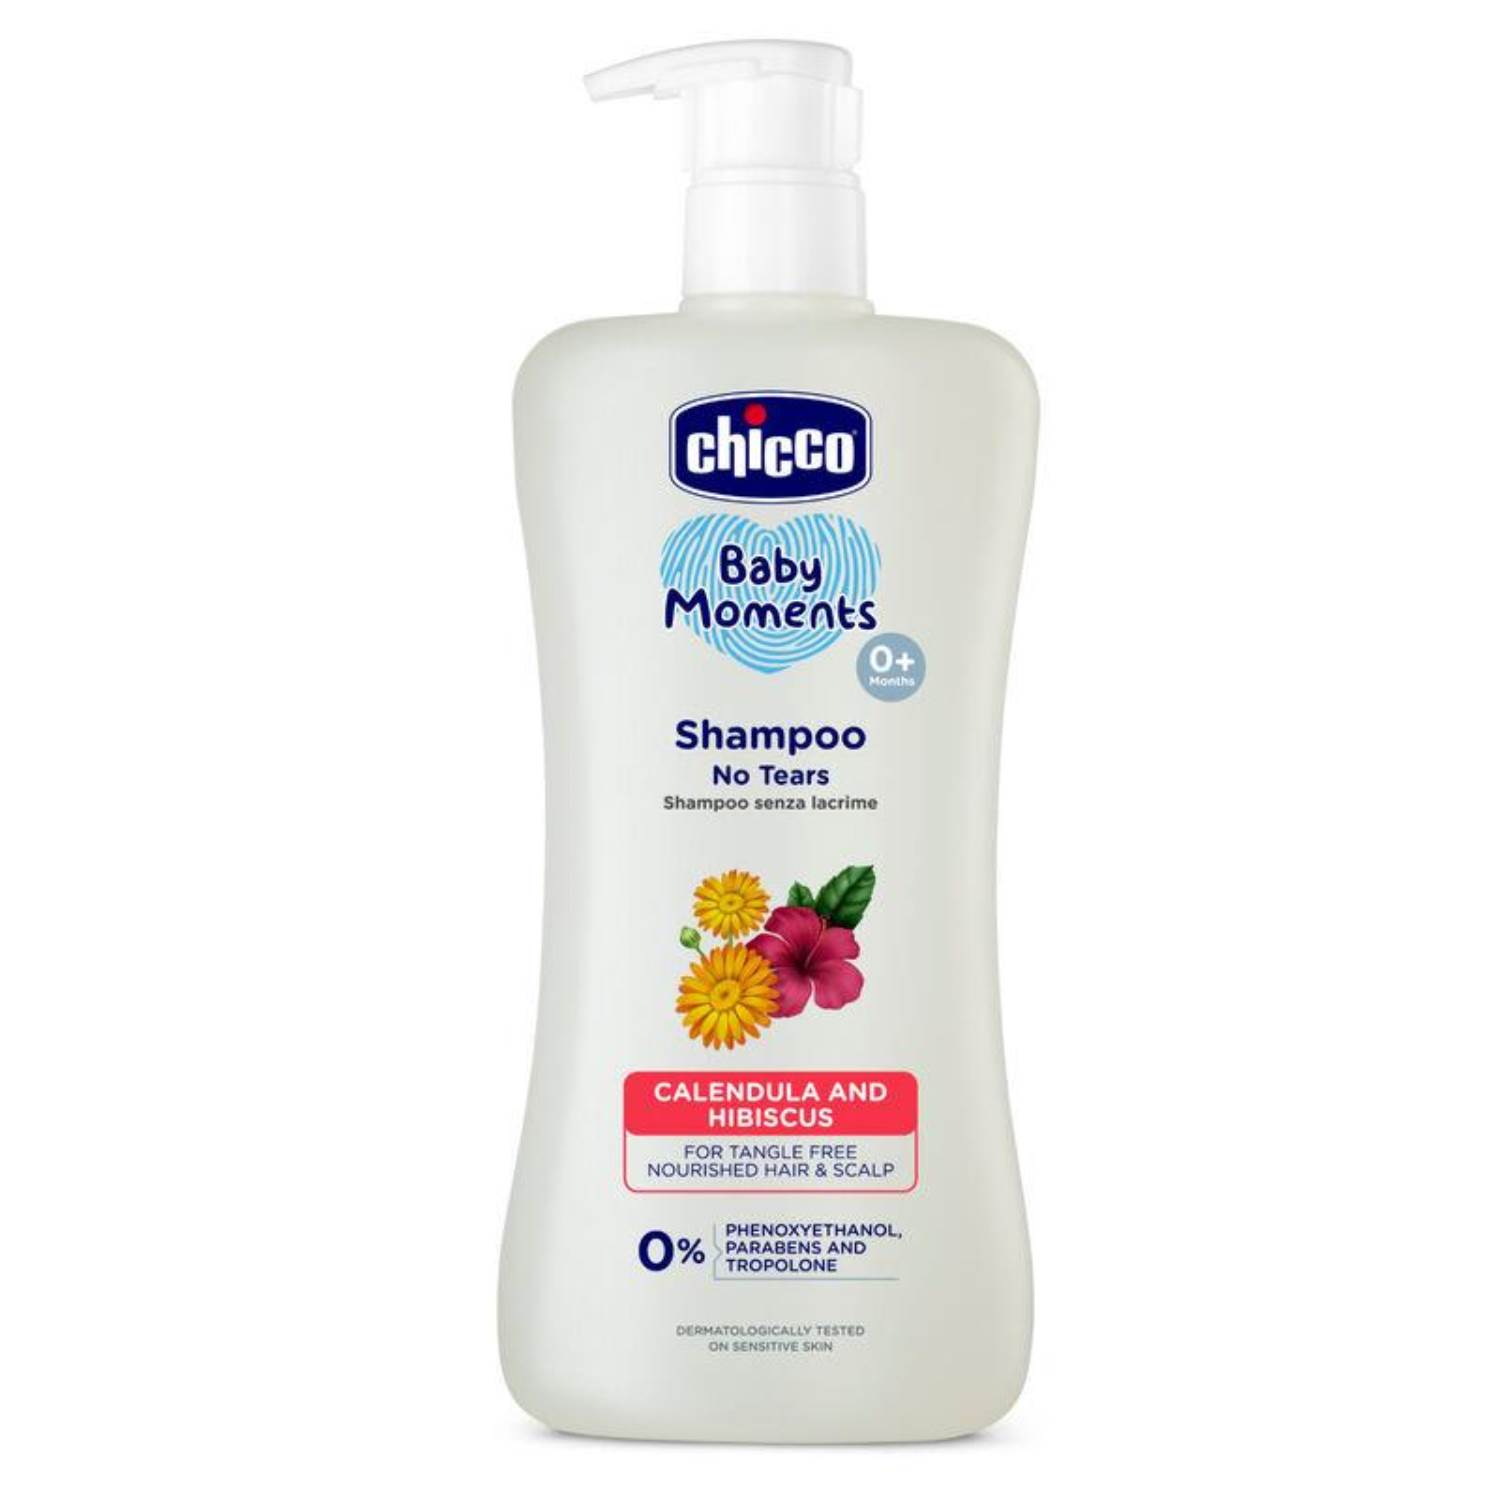 Chicco Baby Moments Shampoo for Tear-Free Bath times, New Advanced